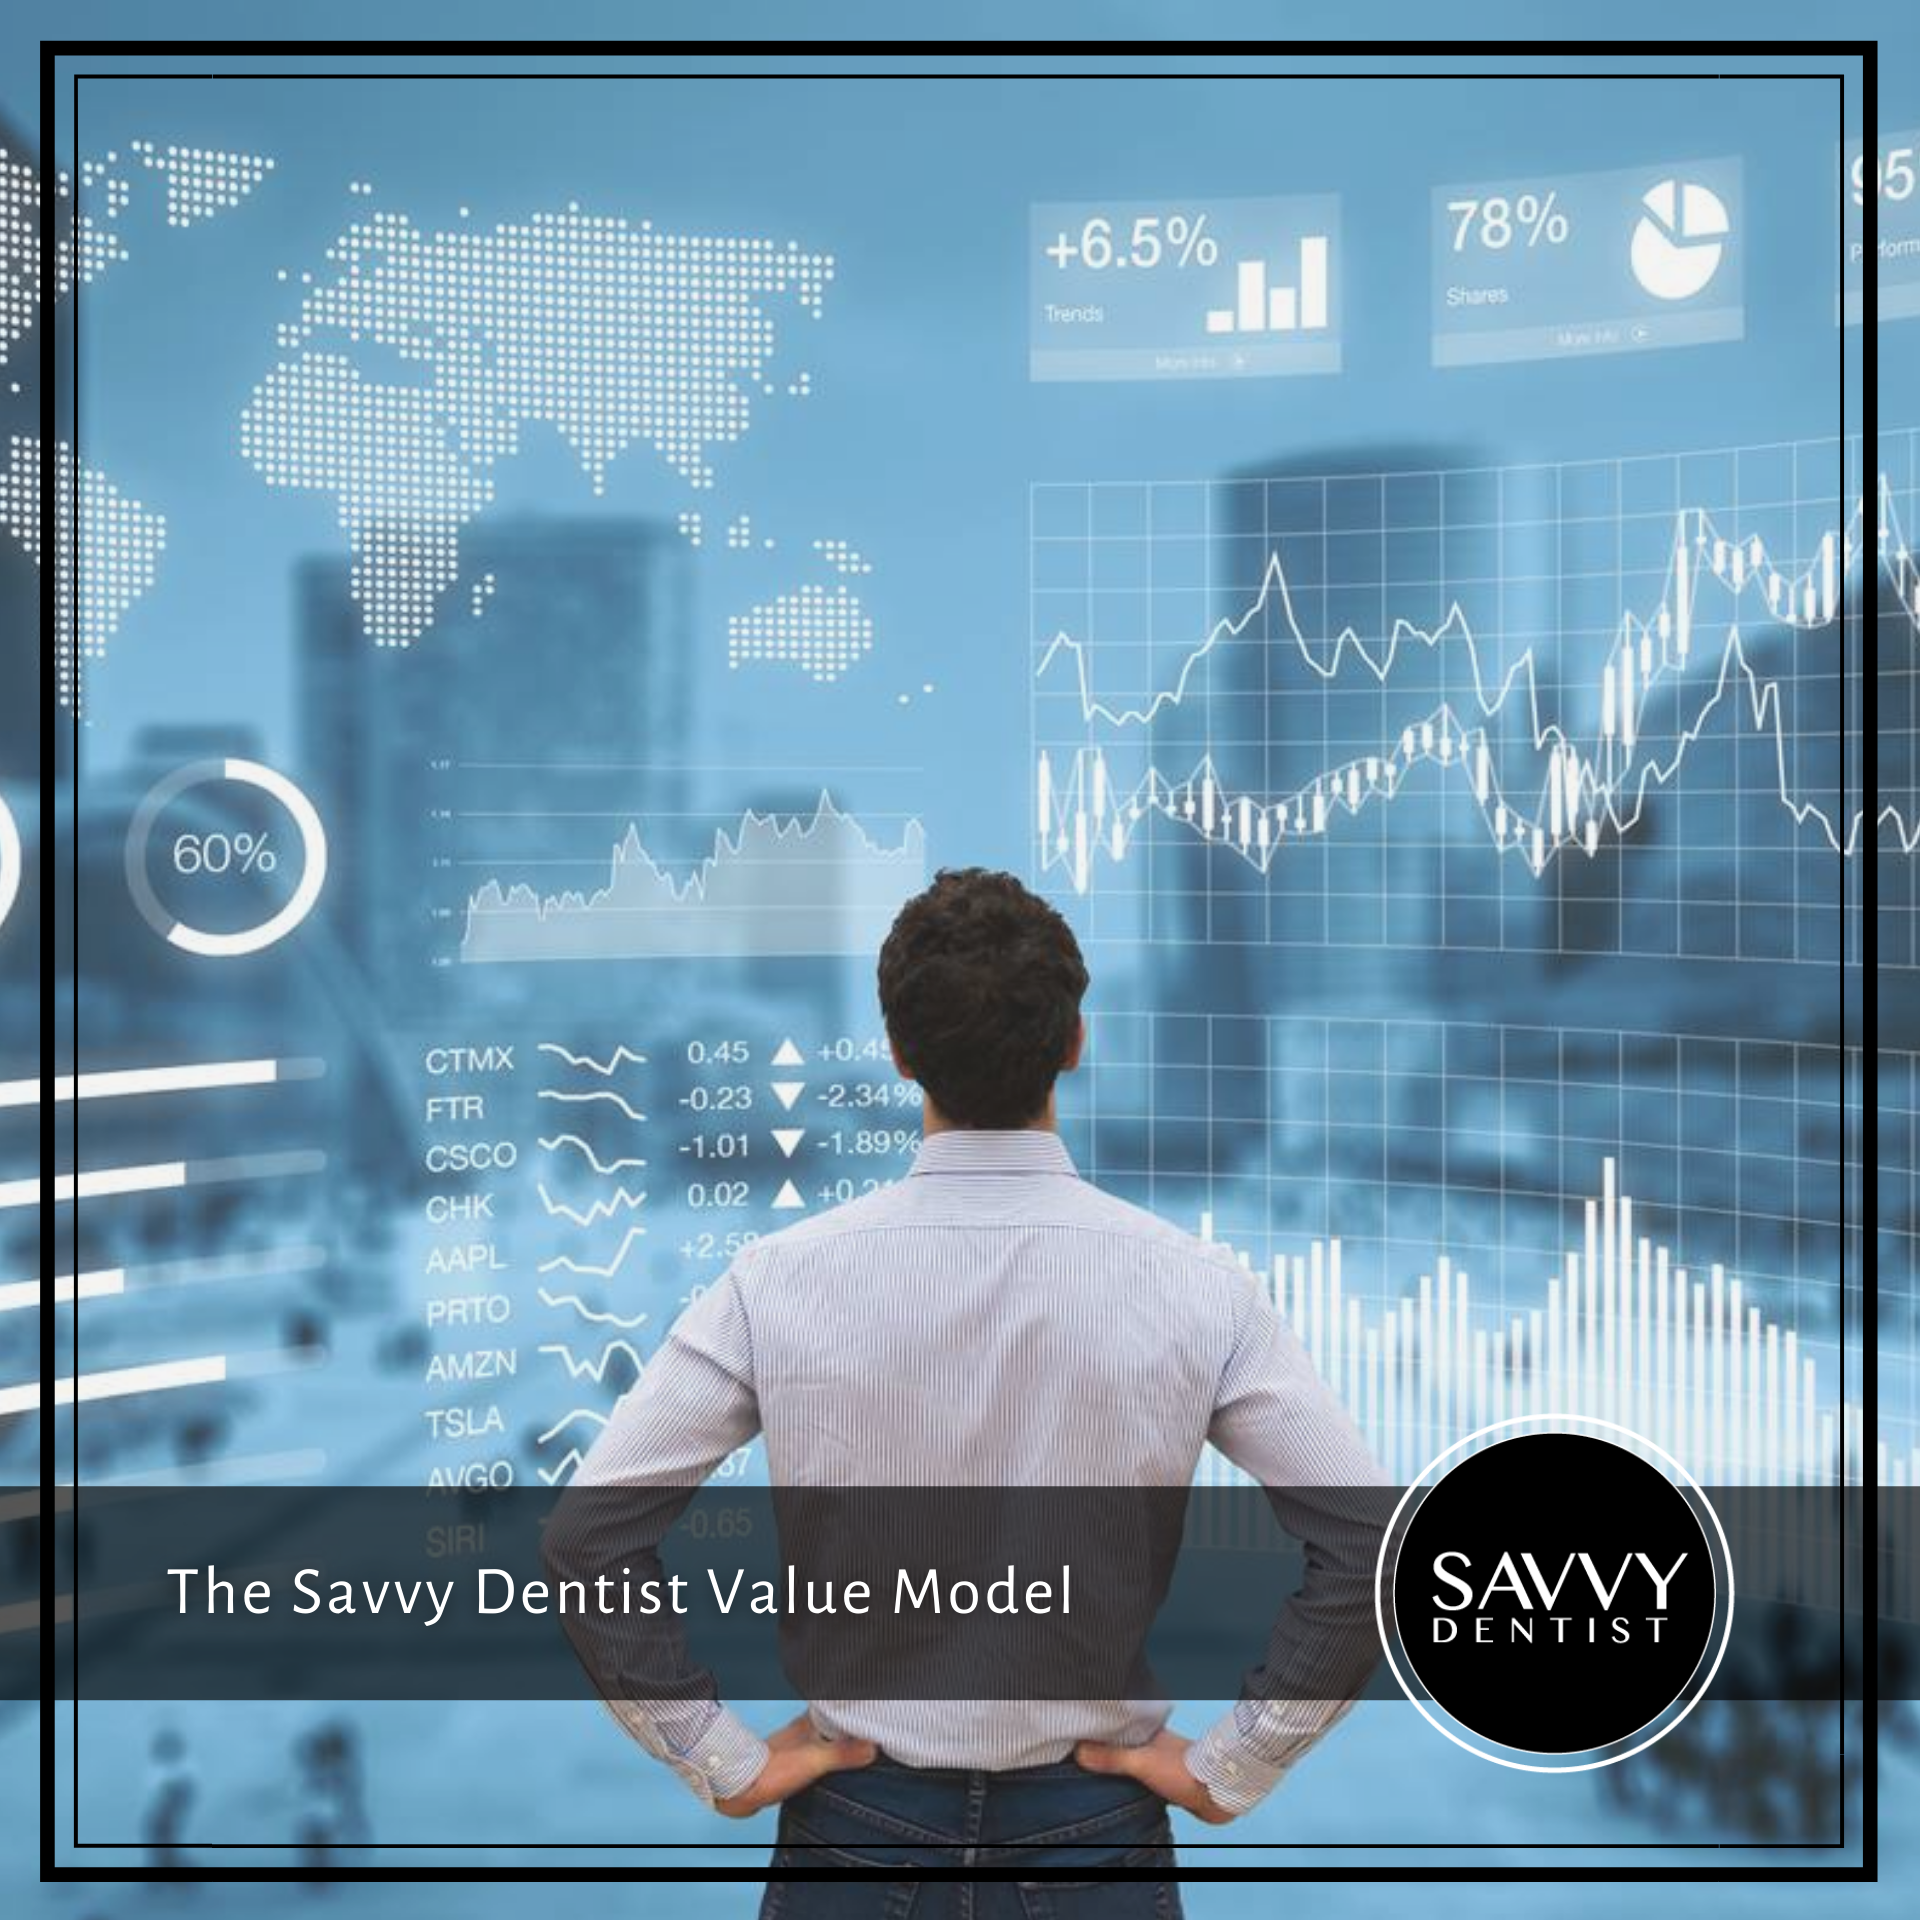 The Savvy Dentist Value Model™